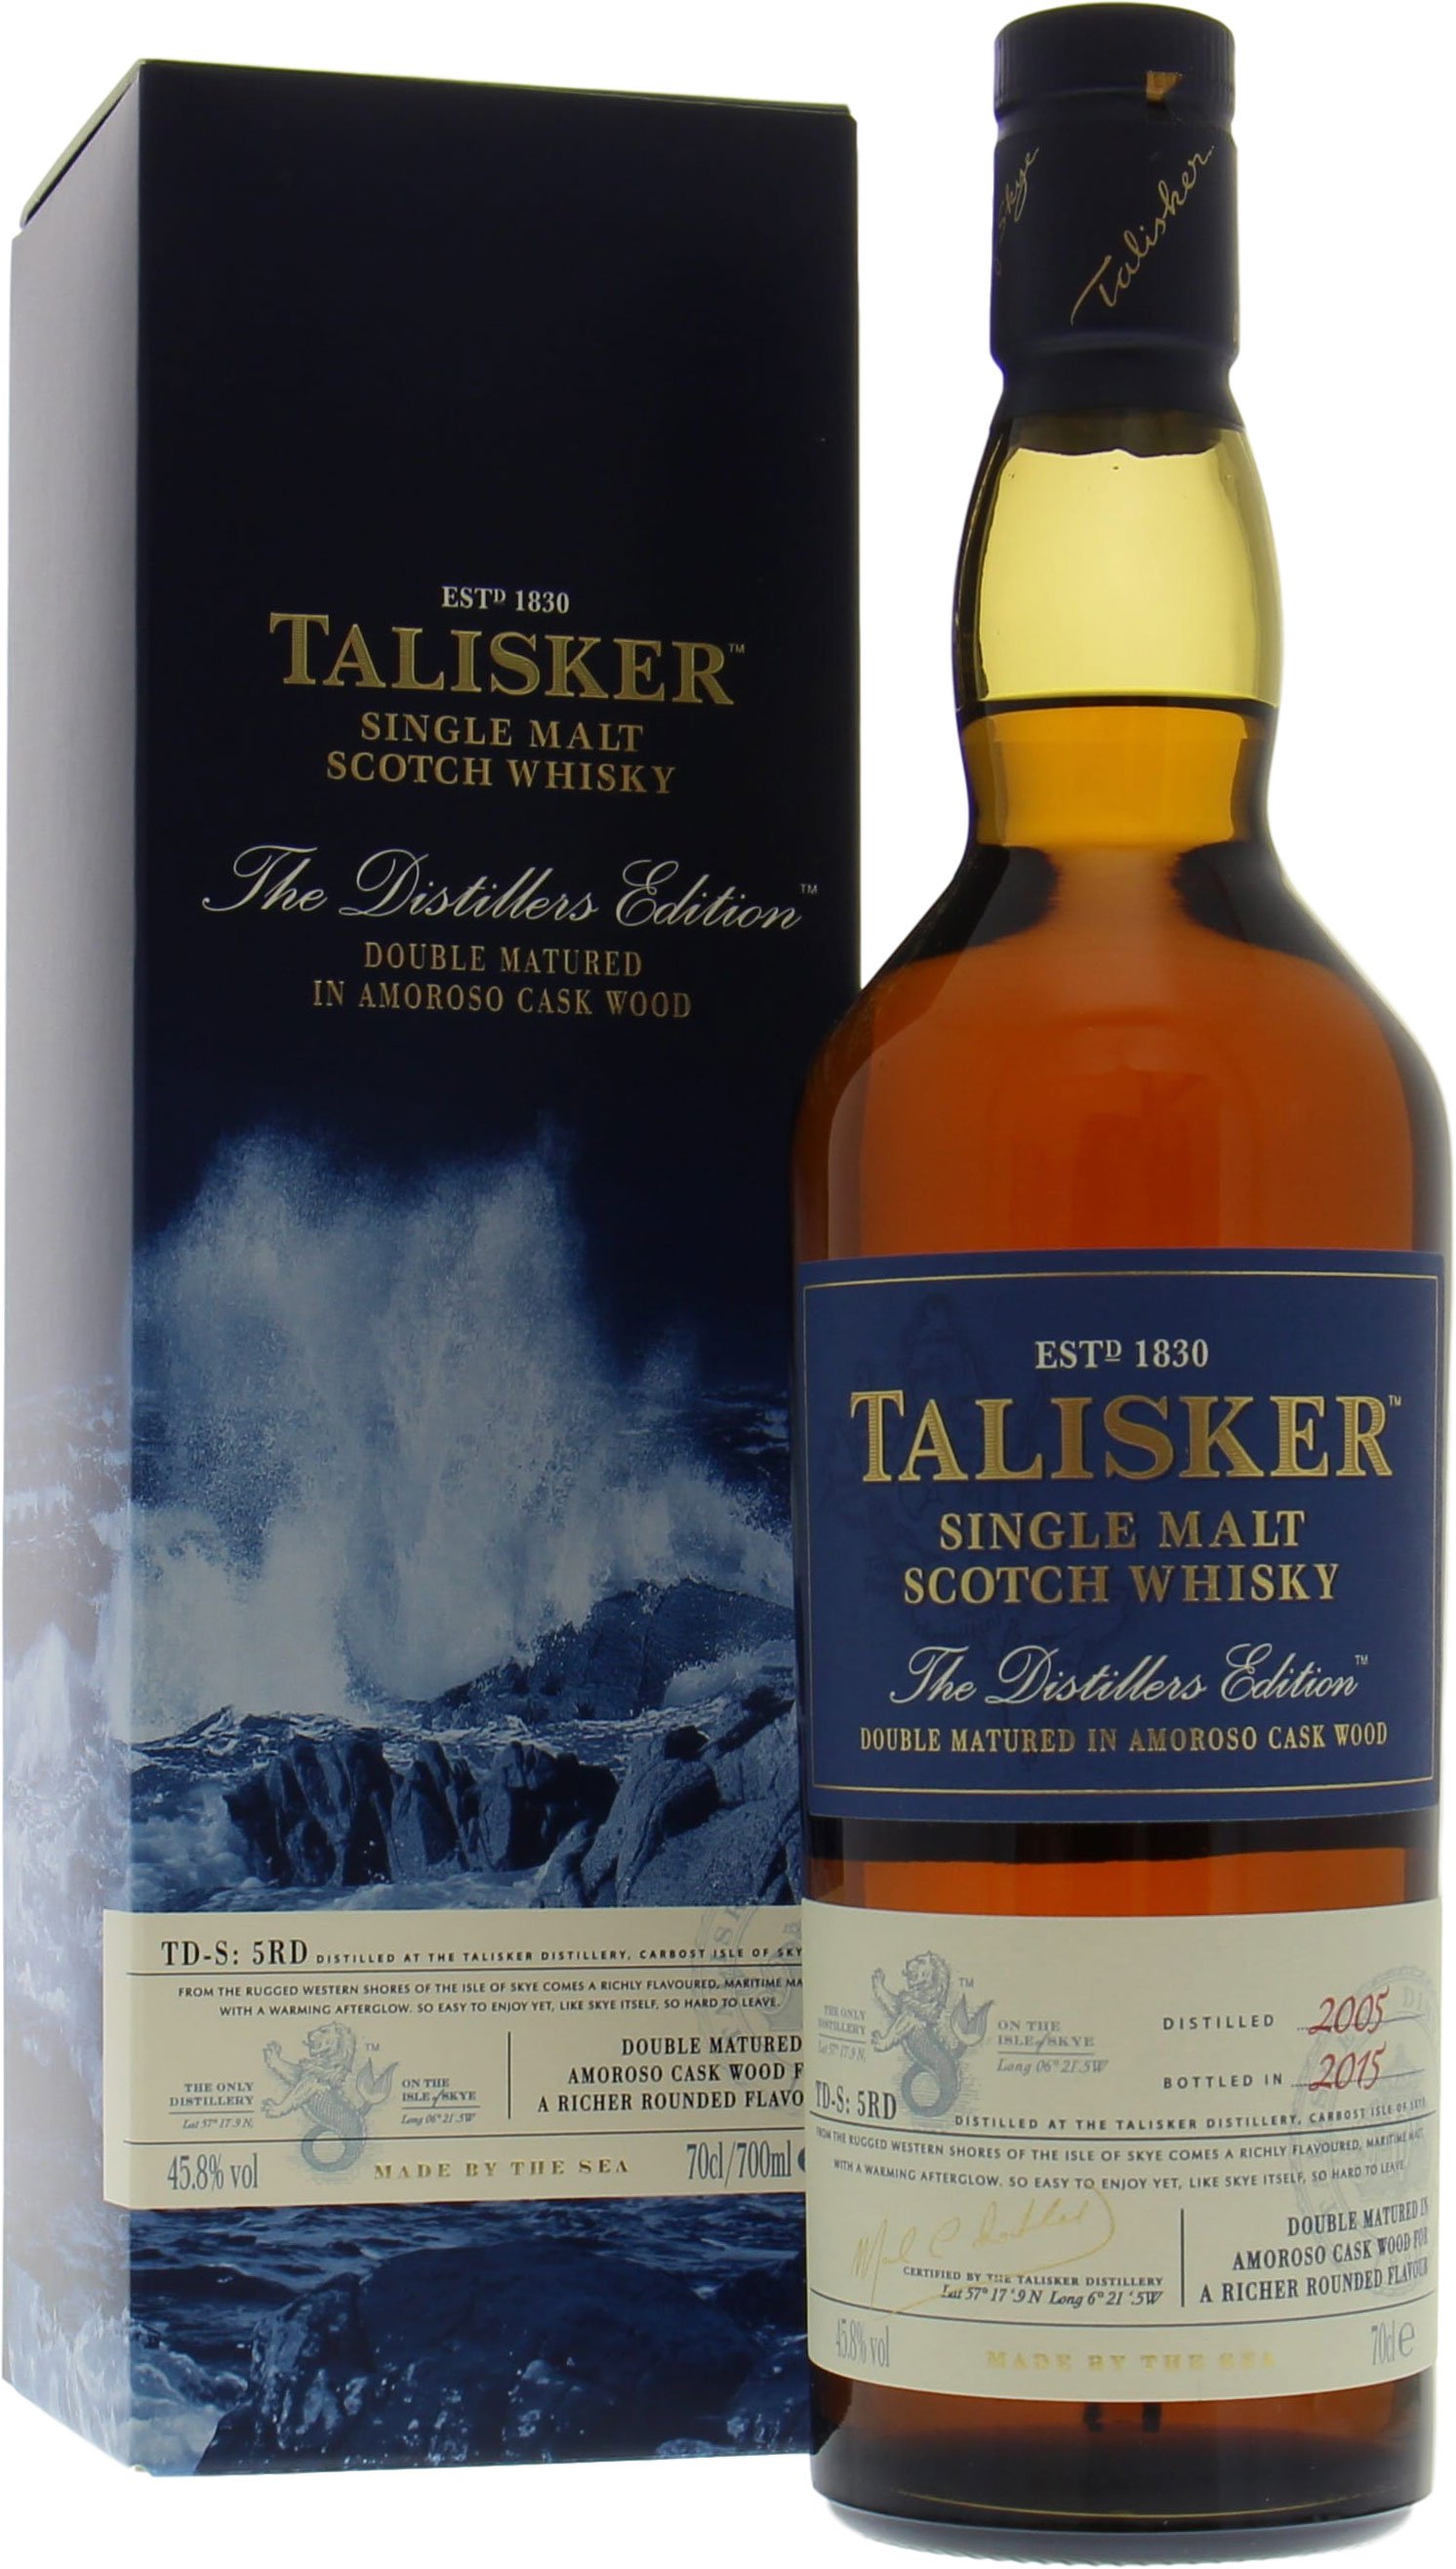 Talisker - Distillers Edition 2015 45.8% 2005 In Original Container